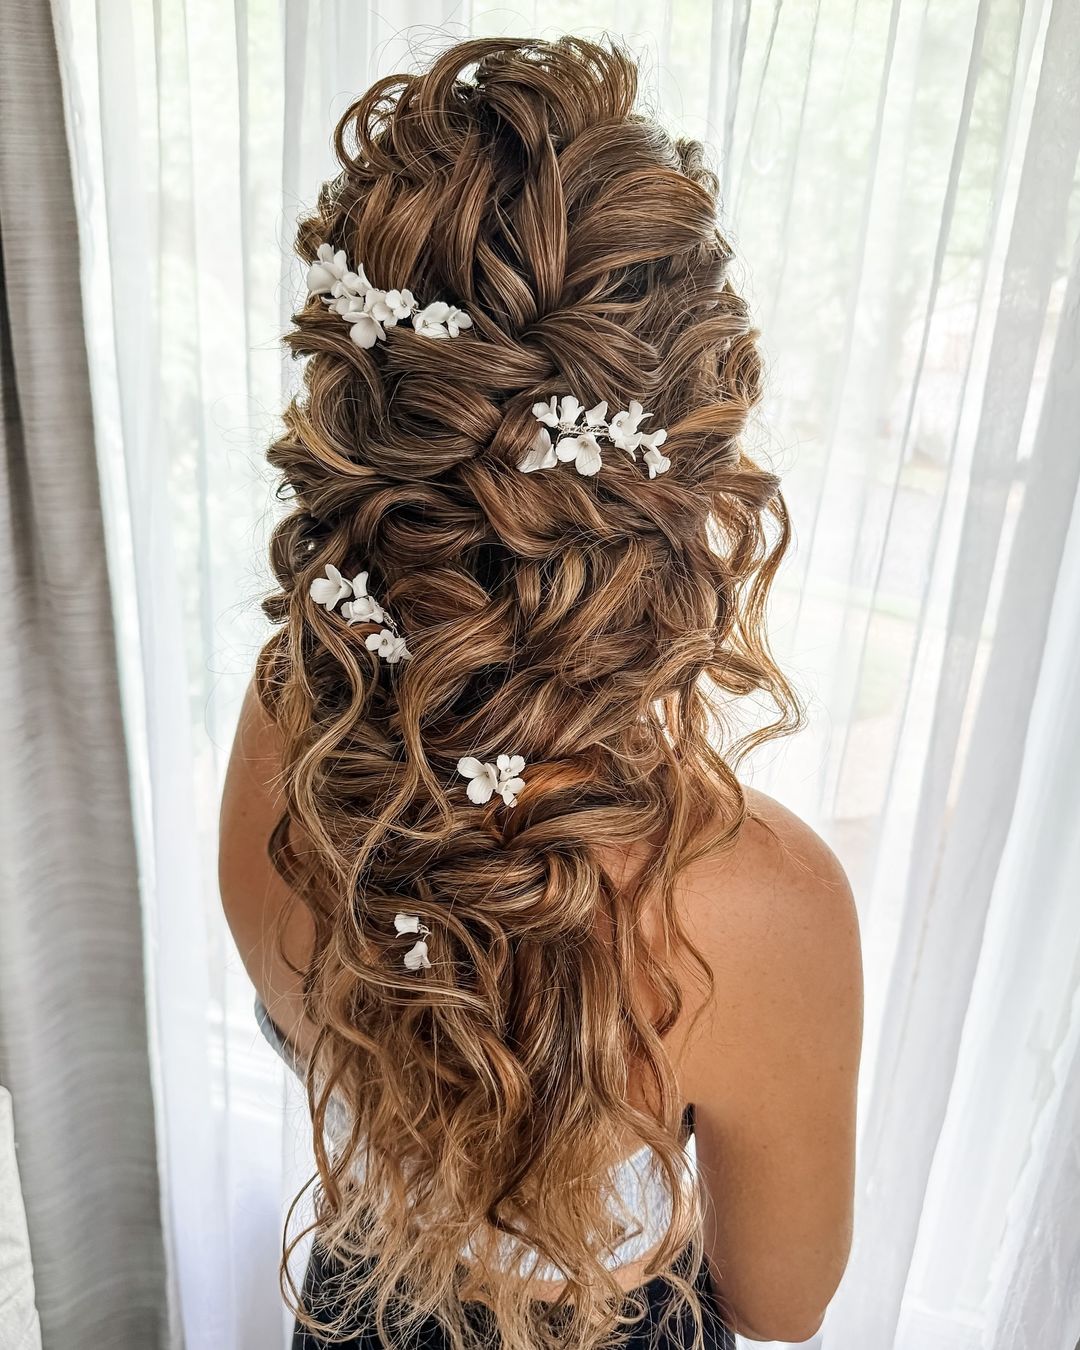 textured mermaid braid with floral hair ornaments